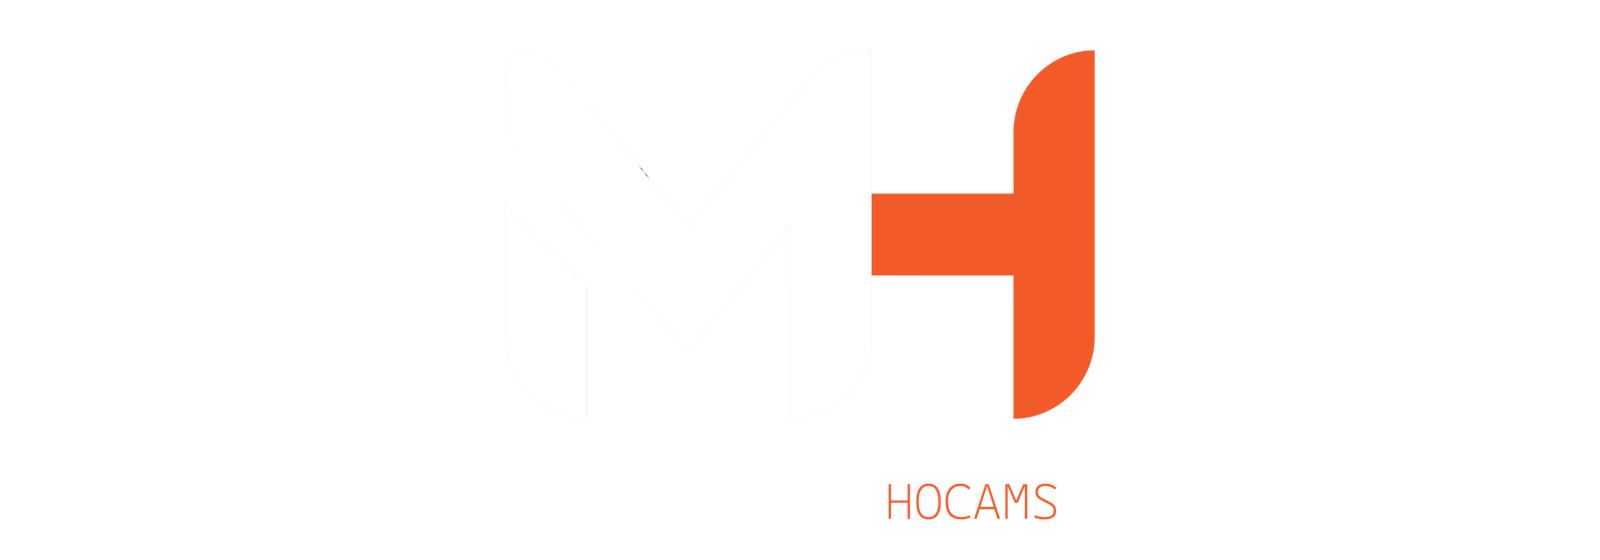 Marketinghocams